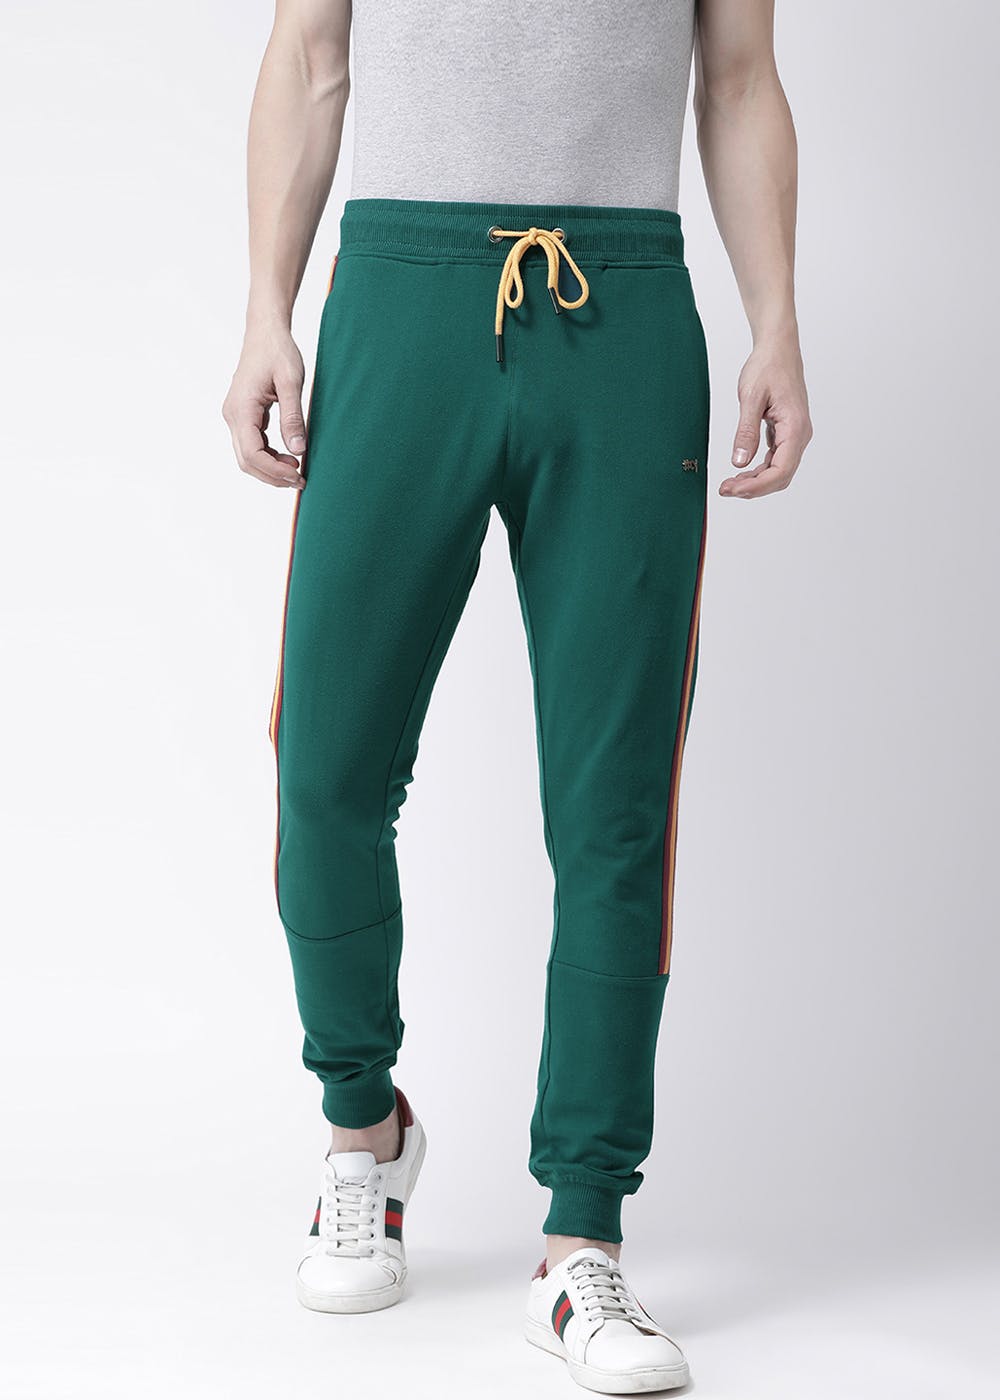 Get Side Strip Detail Green Jogger Pants at ₹ 1099 | LBB Shop